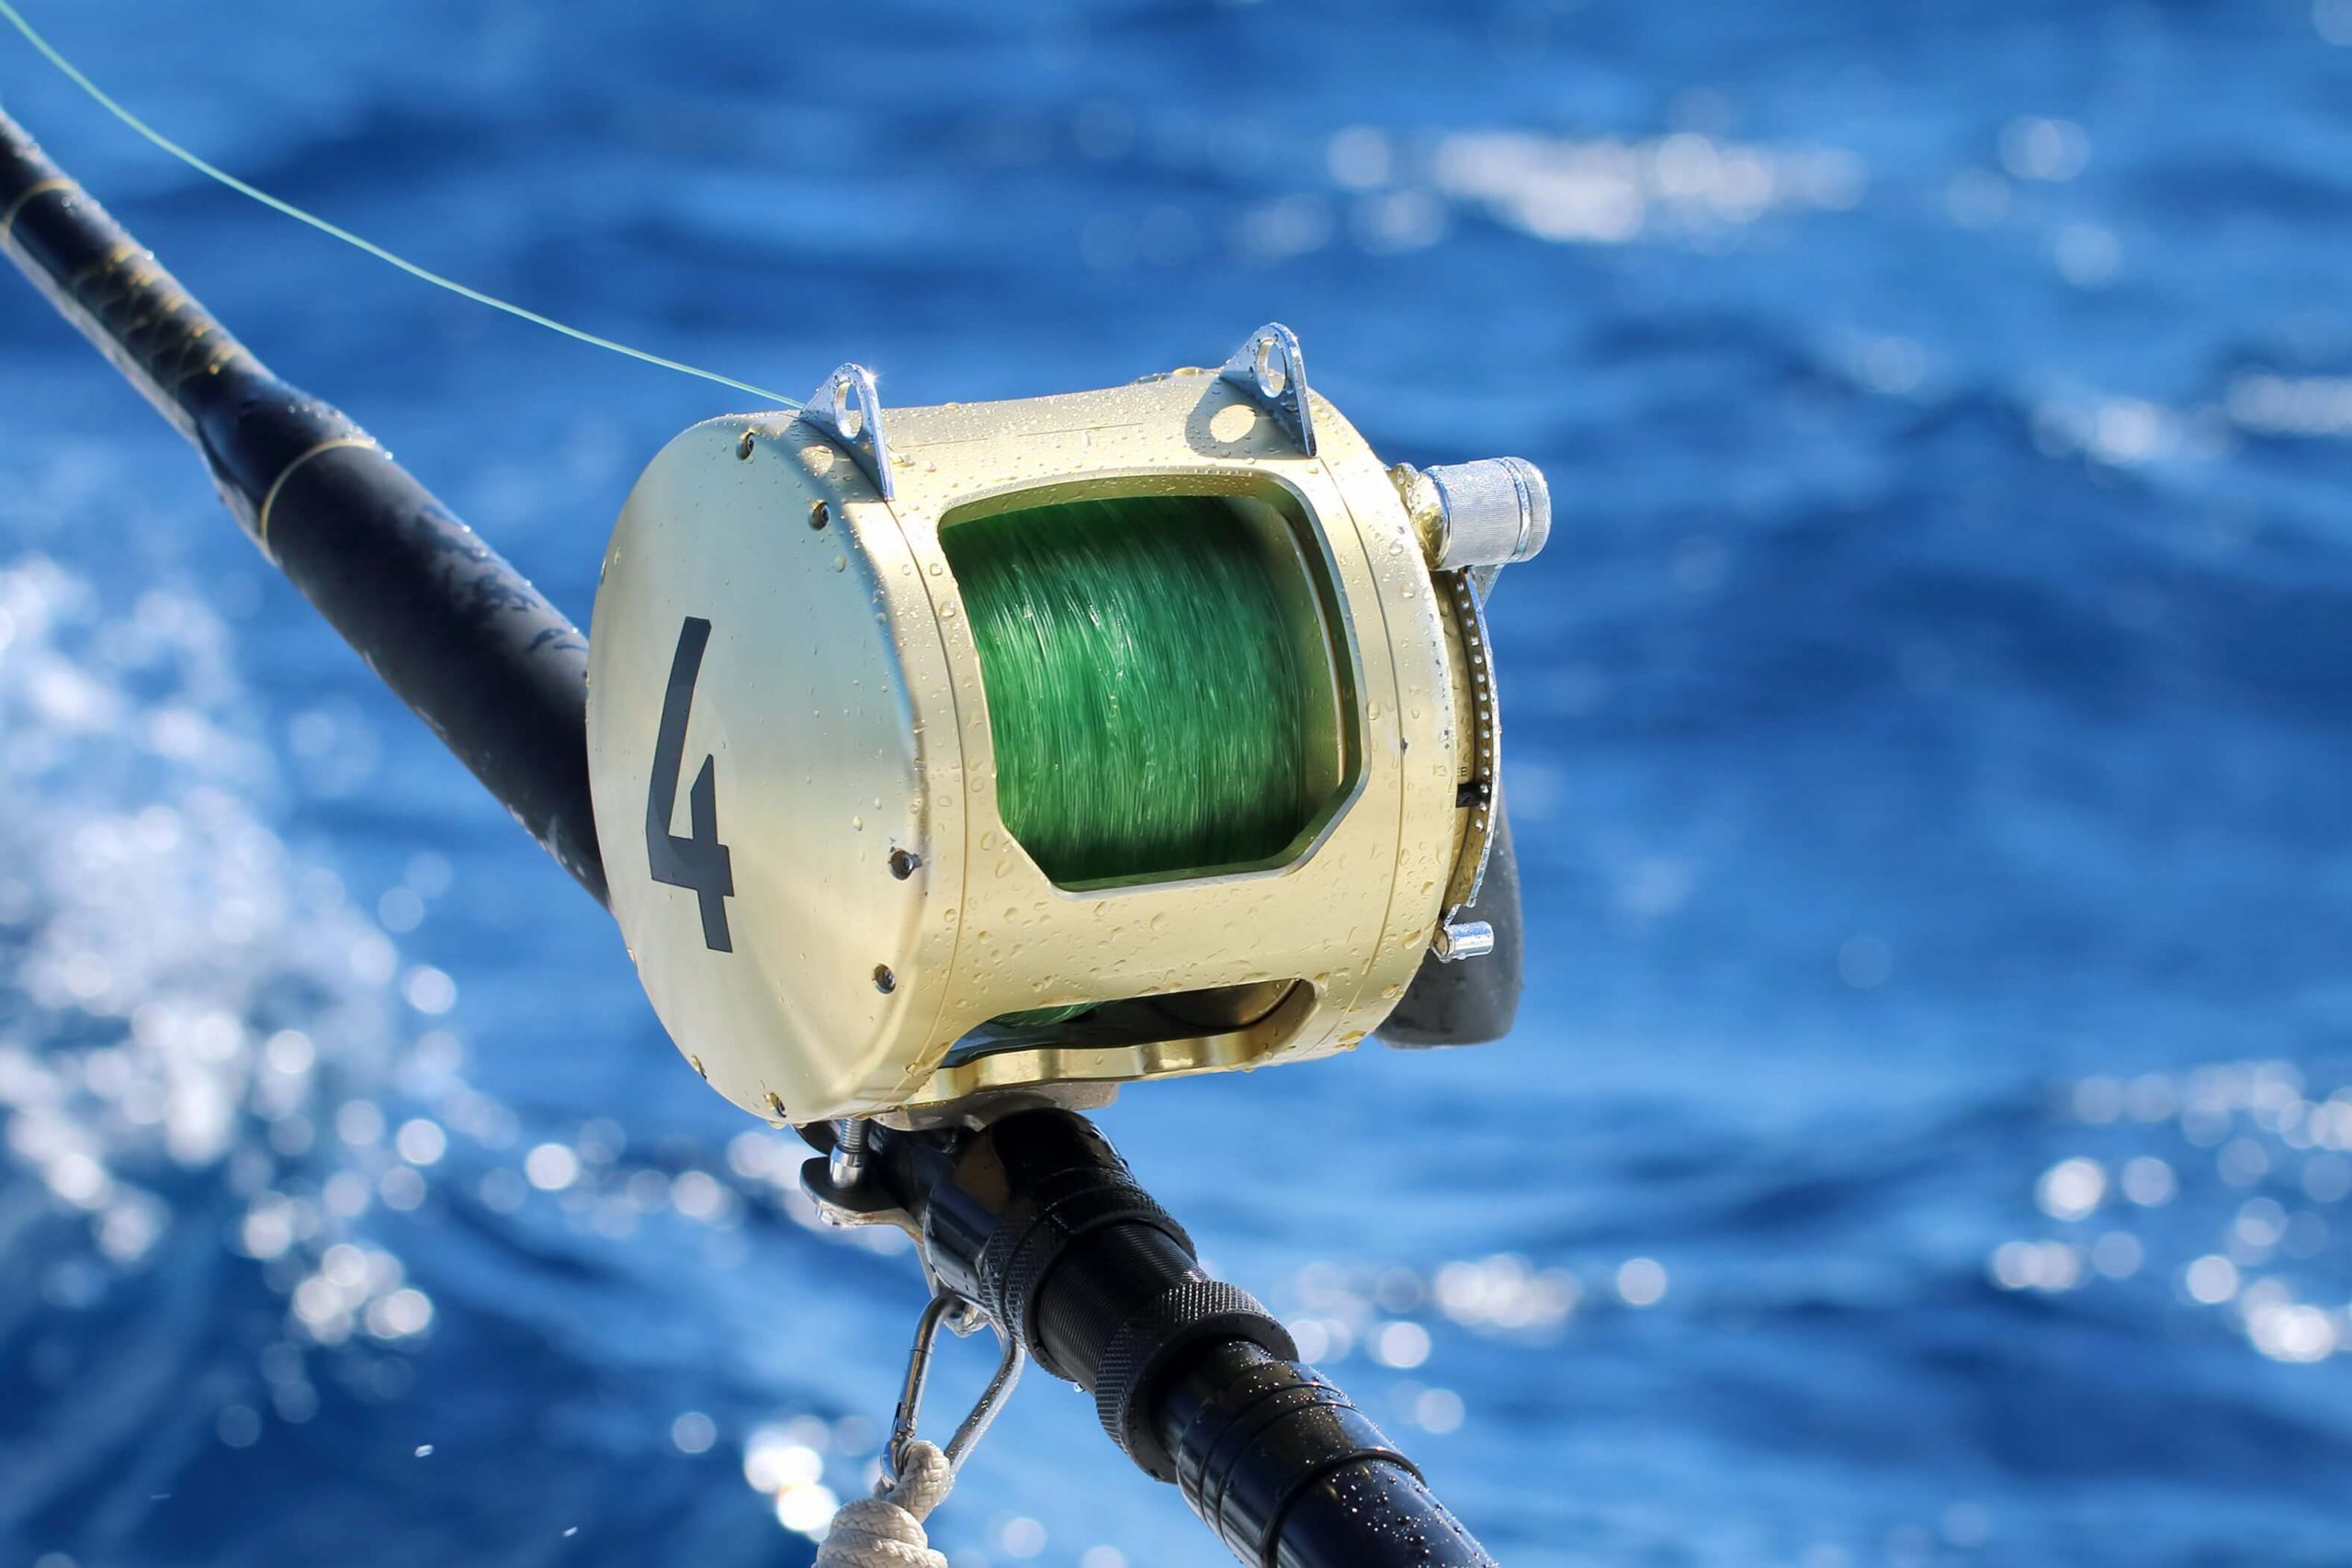 Improve Your Offshore Fishing Skills - Coastal Angler & The Angler Magazine